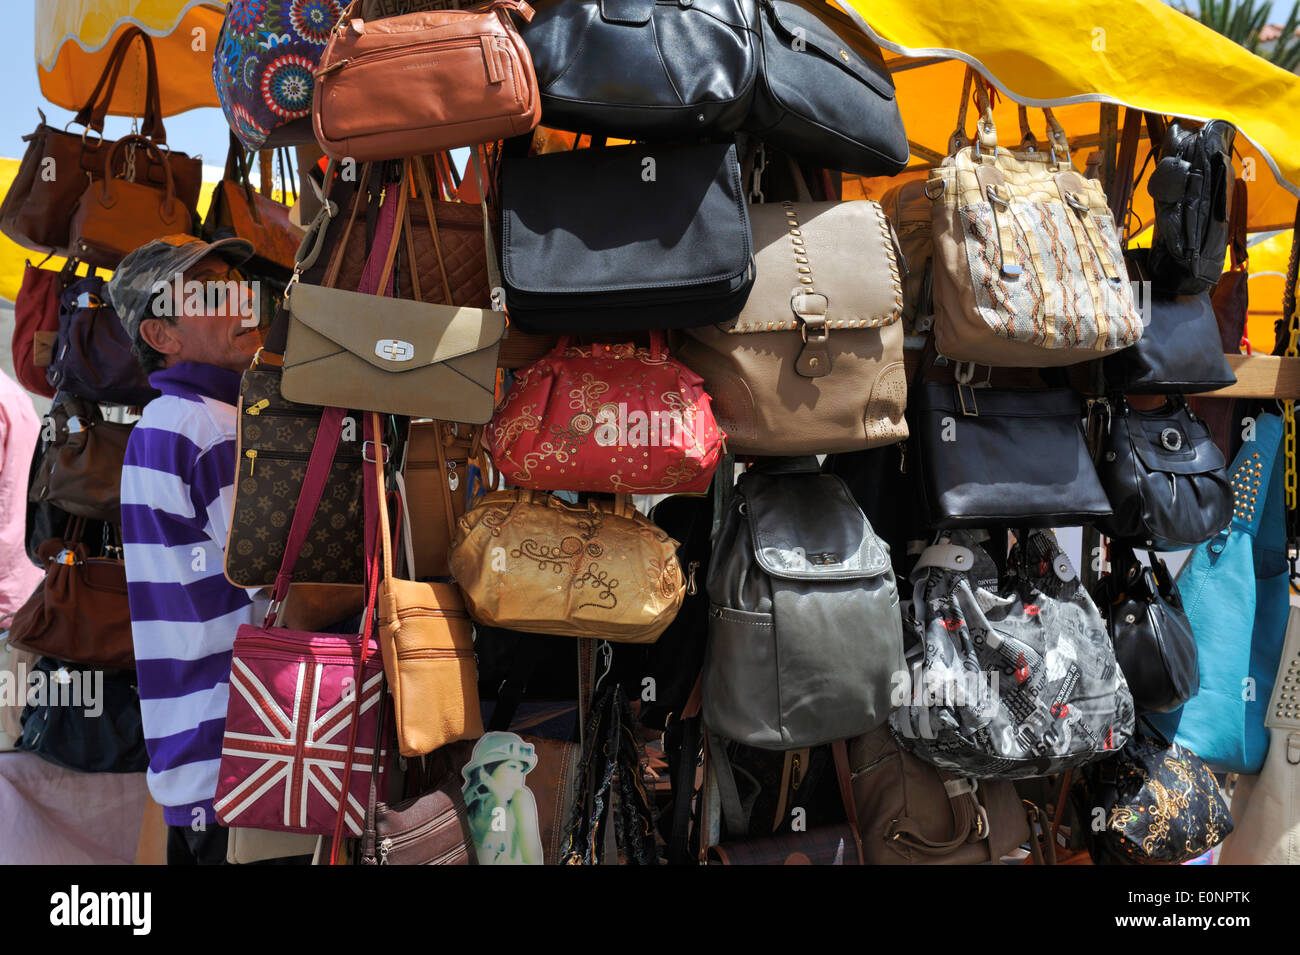 Market stall selling handbags Stock Photo - Alamy